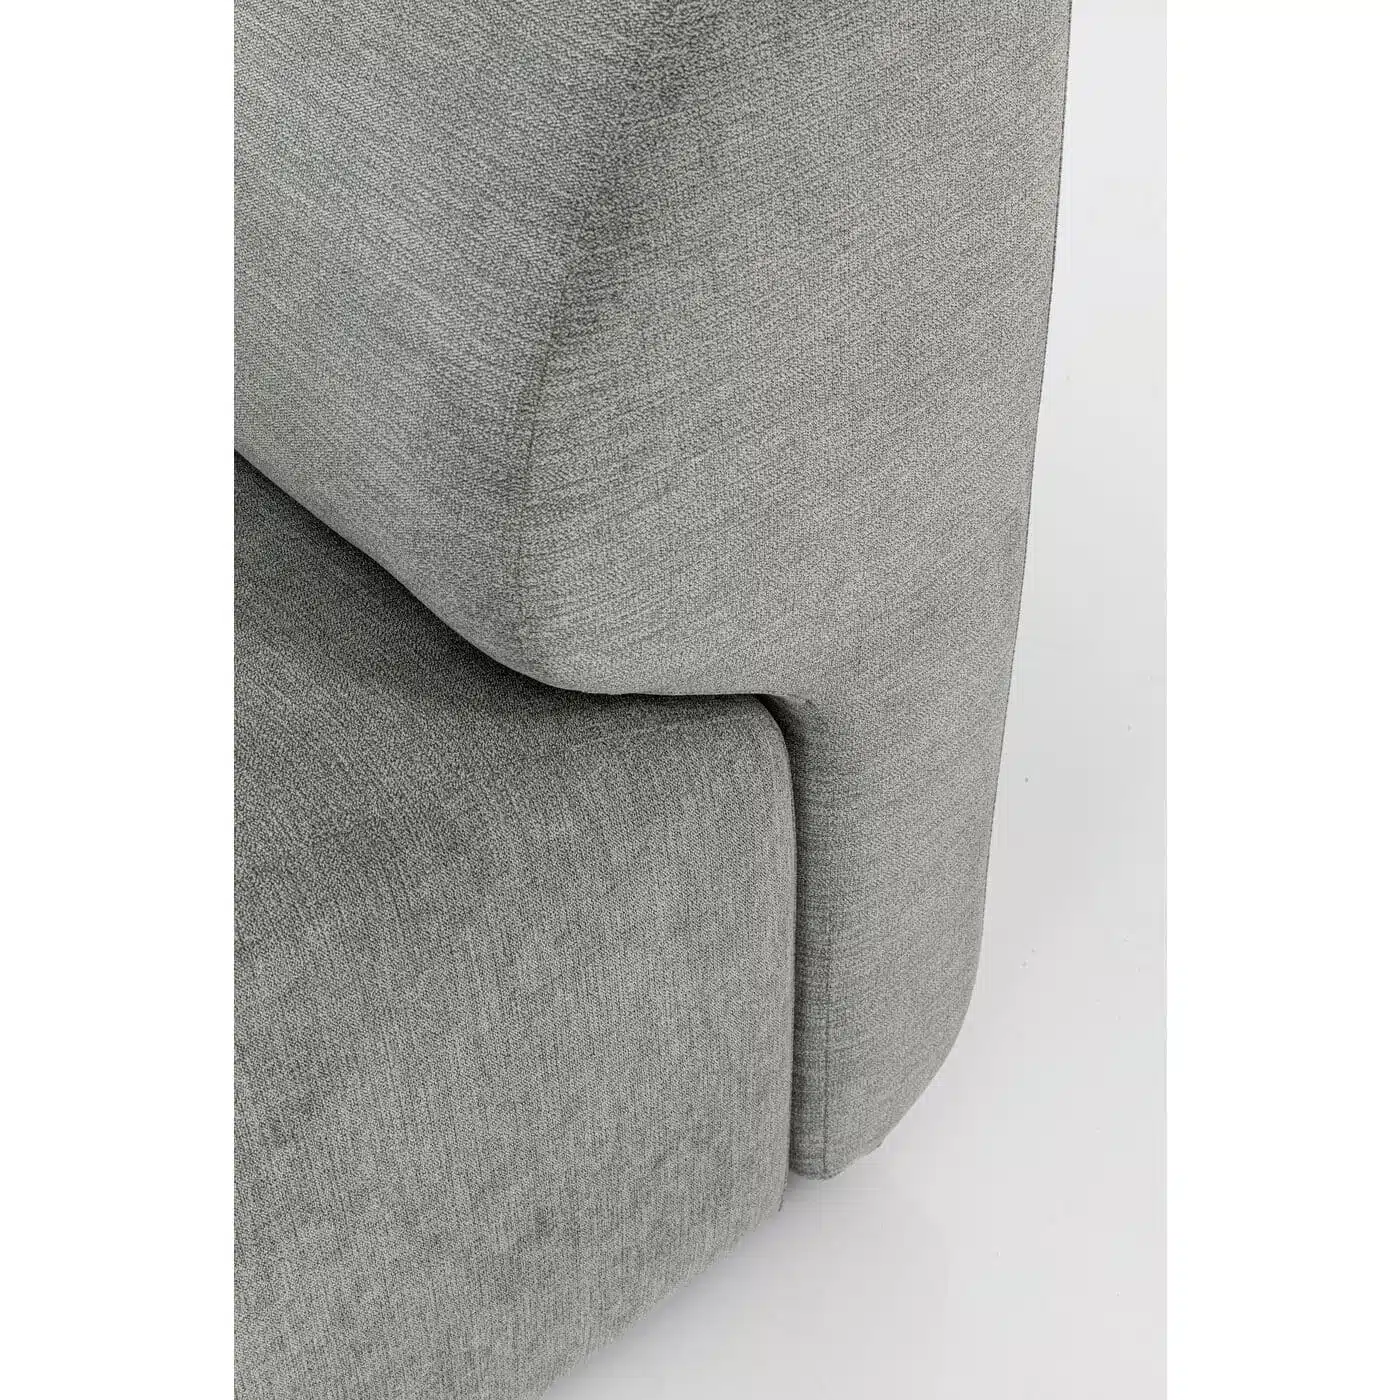 Canapé 3 angles Lucca gris droite Kare Design